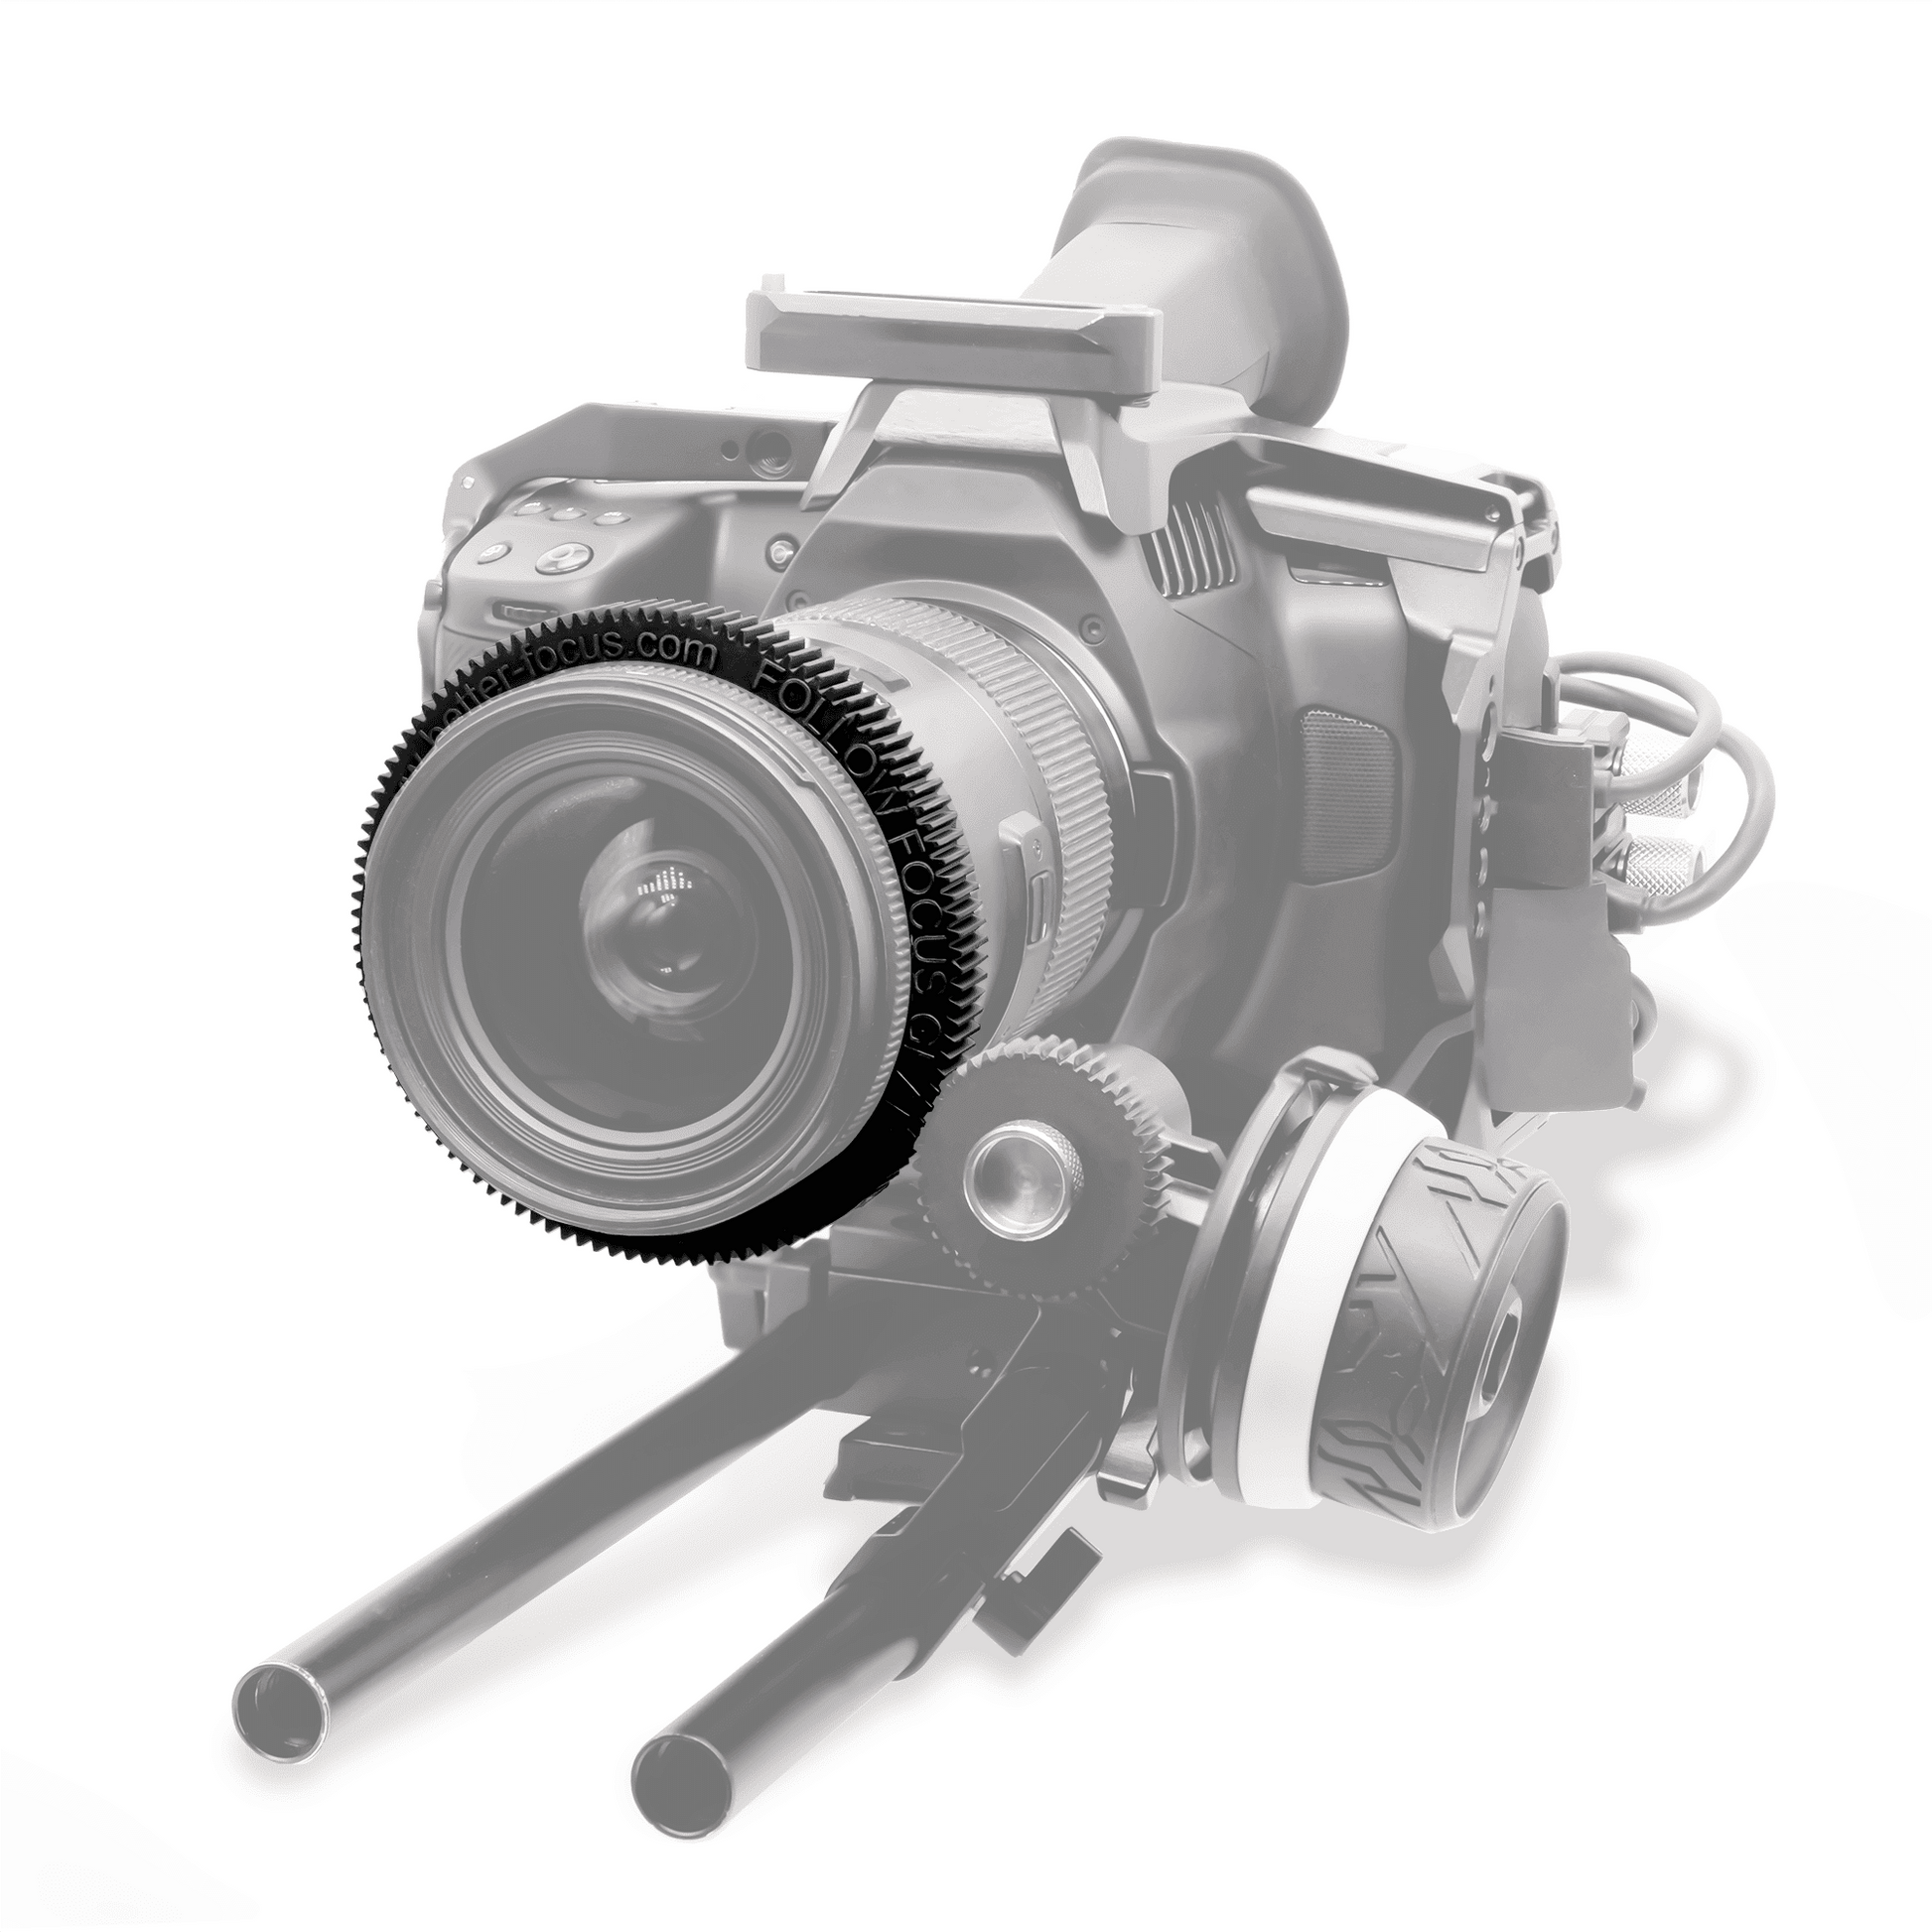 Follow Focus Gear for Sony FE 300mm F/2.8 GM OSS lens